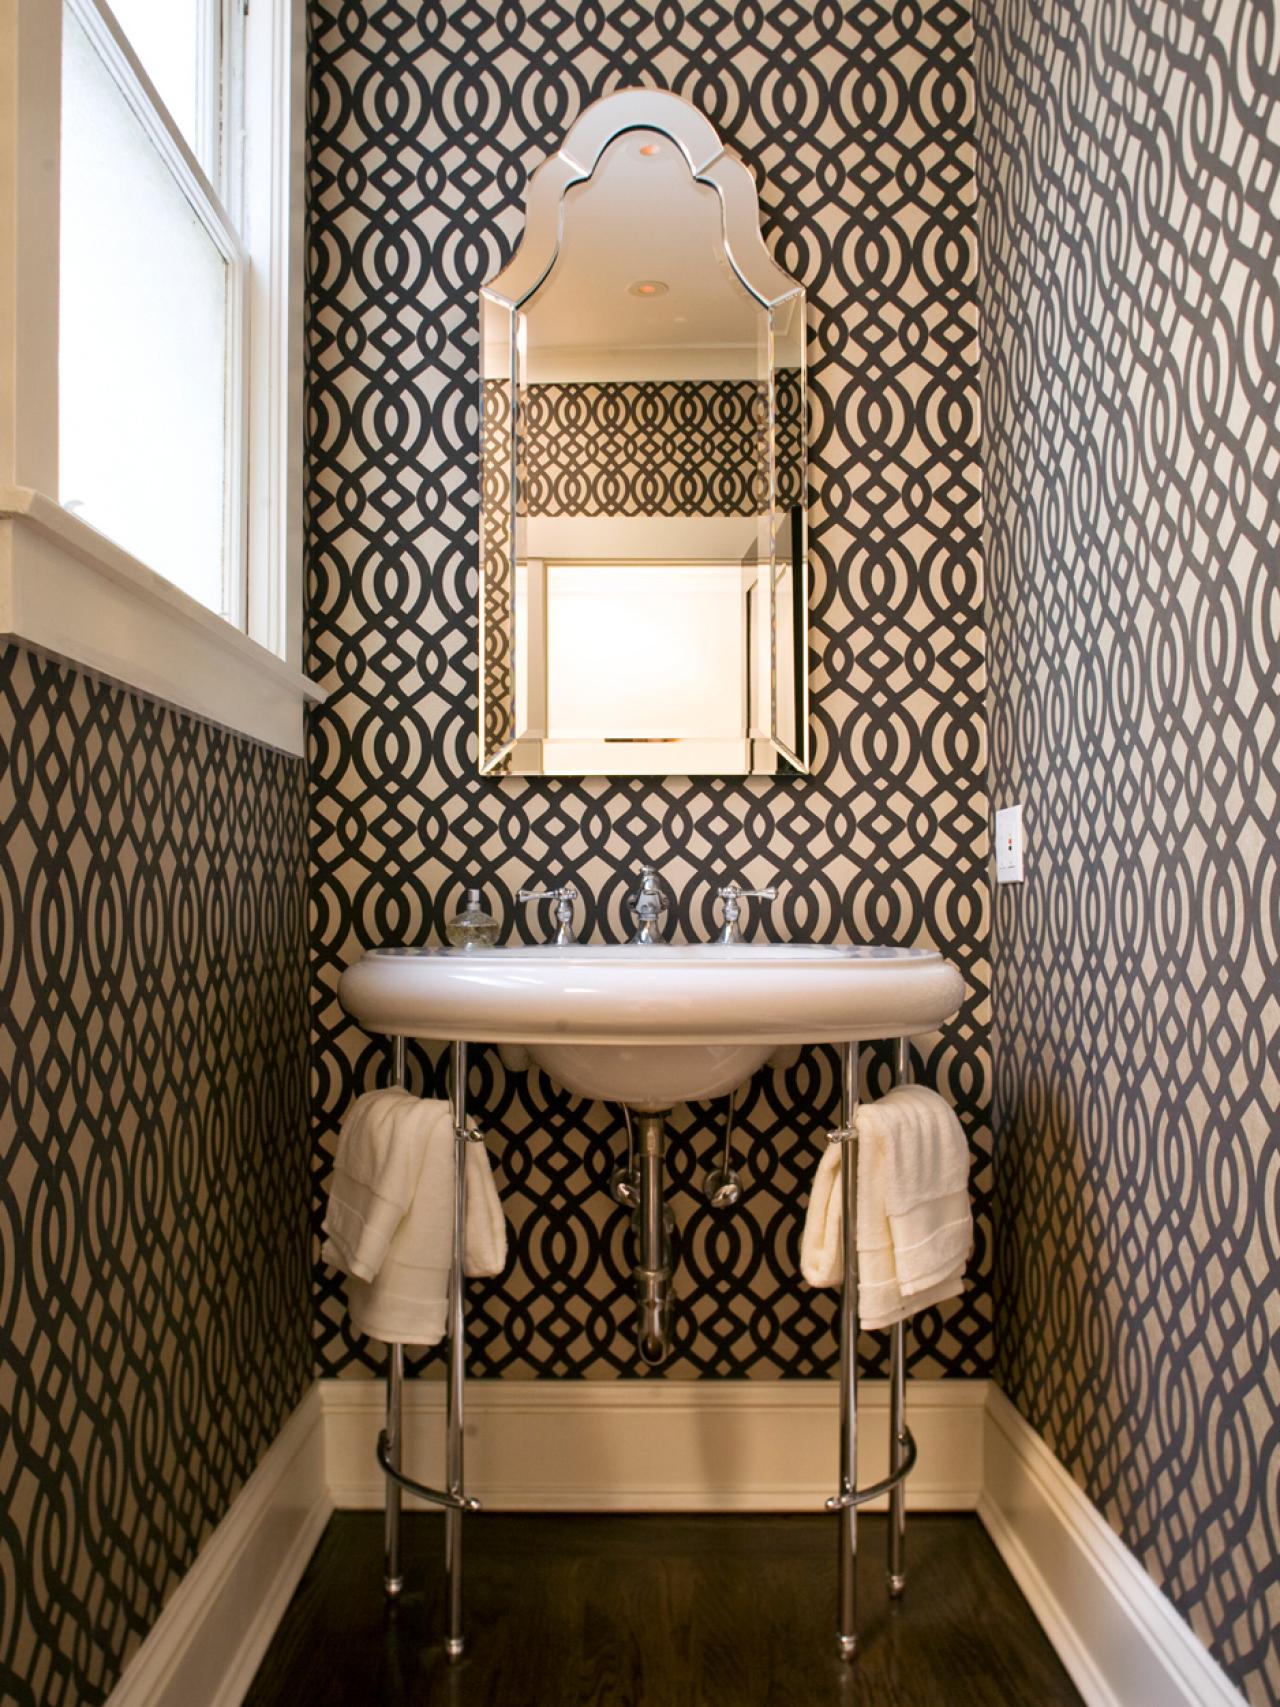 Victorian Bathroom Design Ideas: Pictures & Tips From HGTV | HGTV